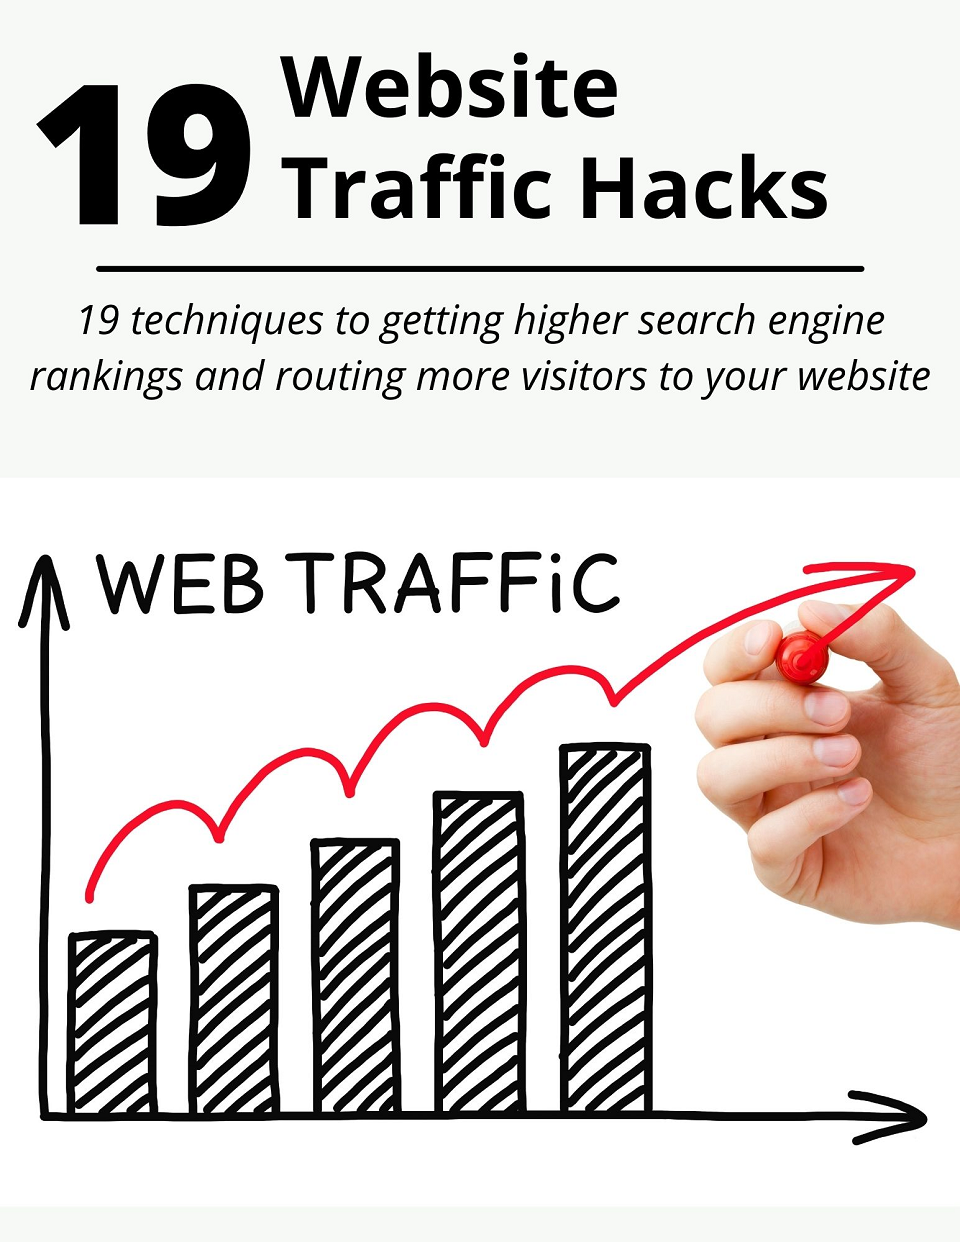 19 Website Traffic Hacks - How to Get More Website Traffic